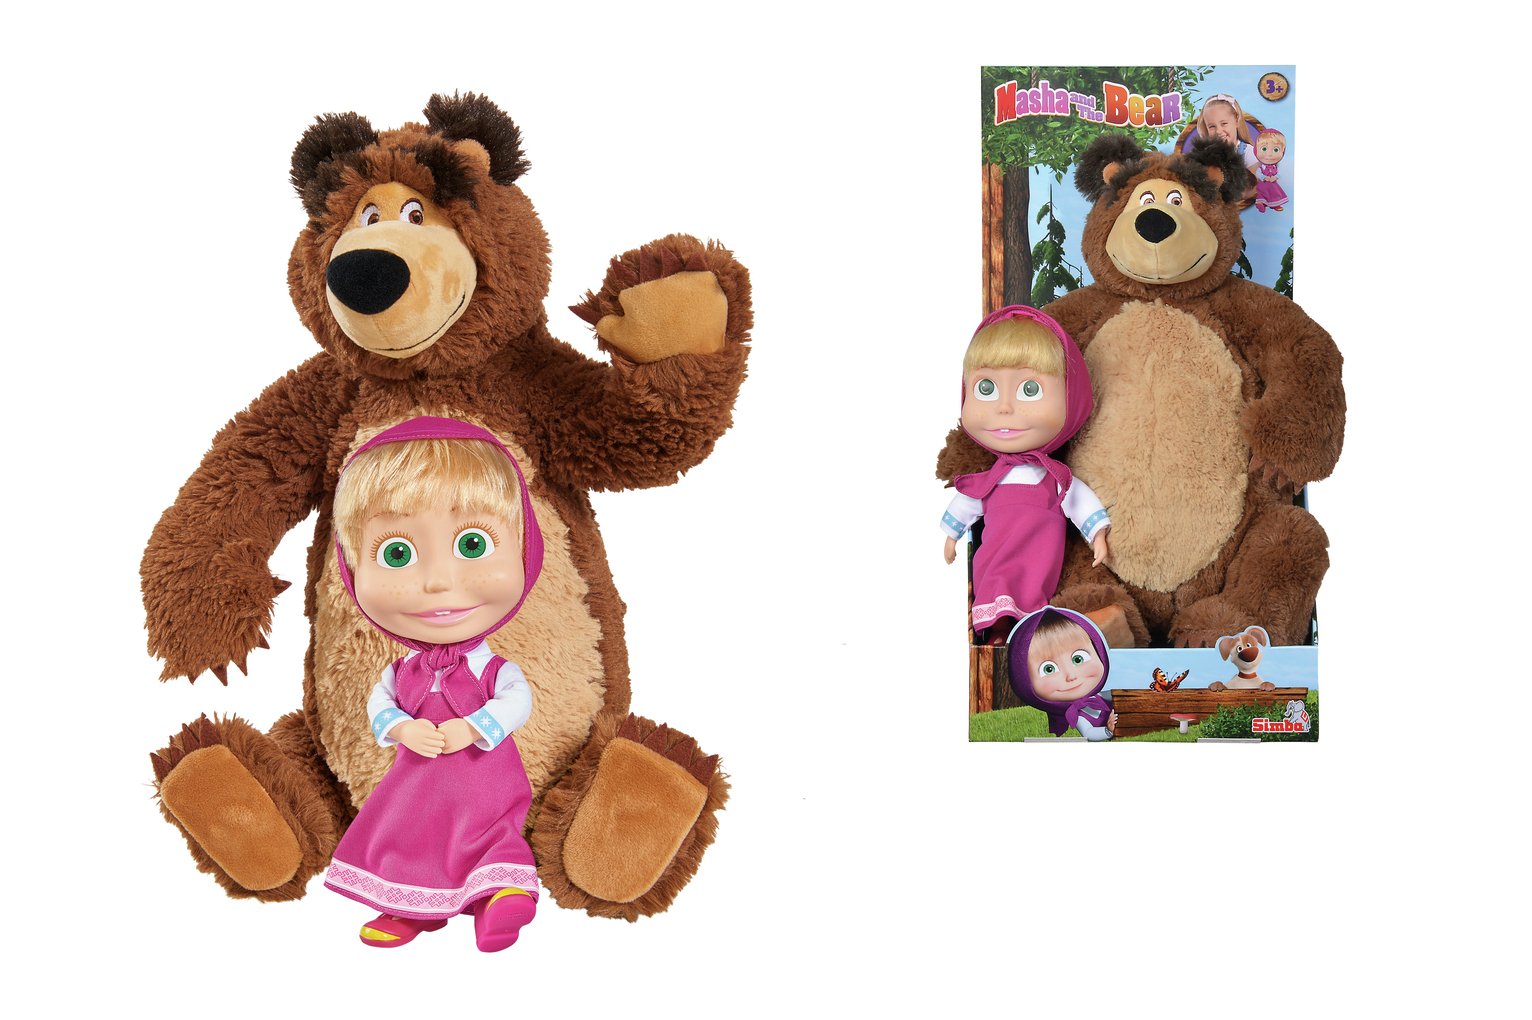 masha the bear doll